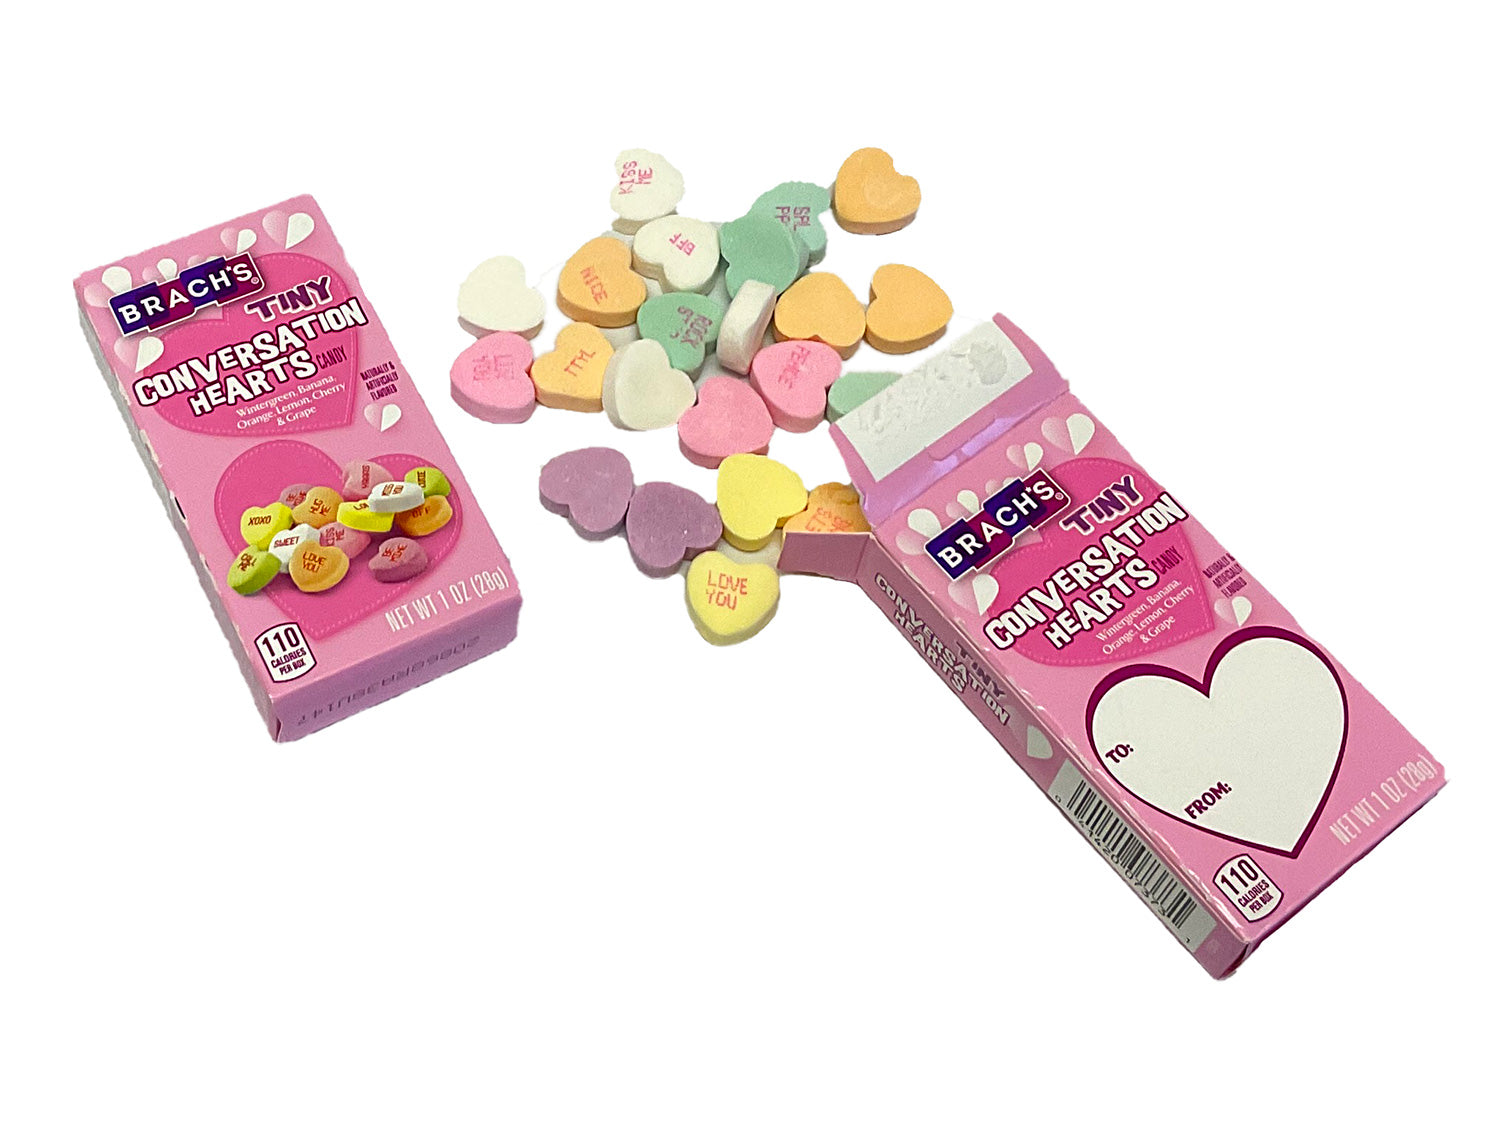 Brach's - Brach's, Candy, Conversation Hearts, Tiny, 4 Pack Value